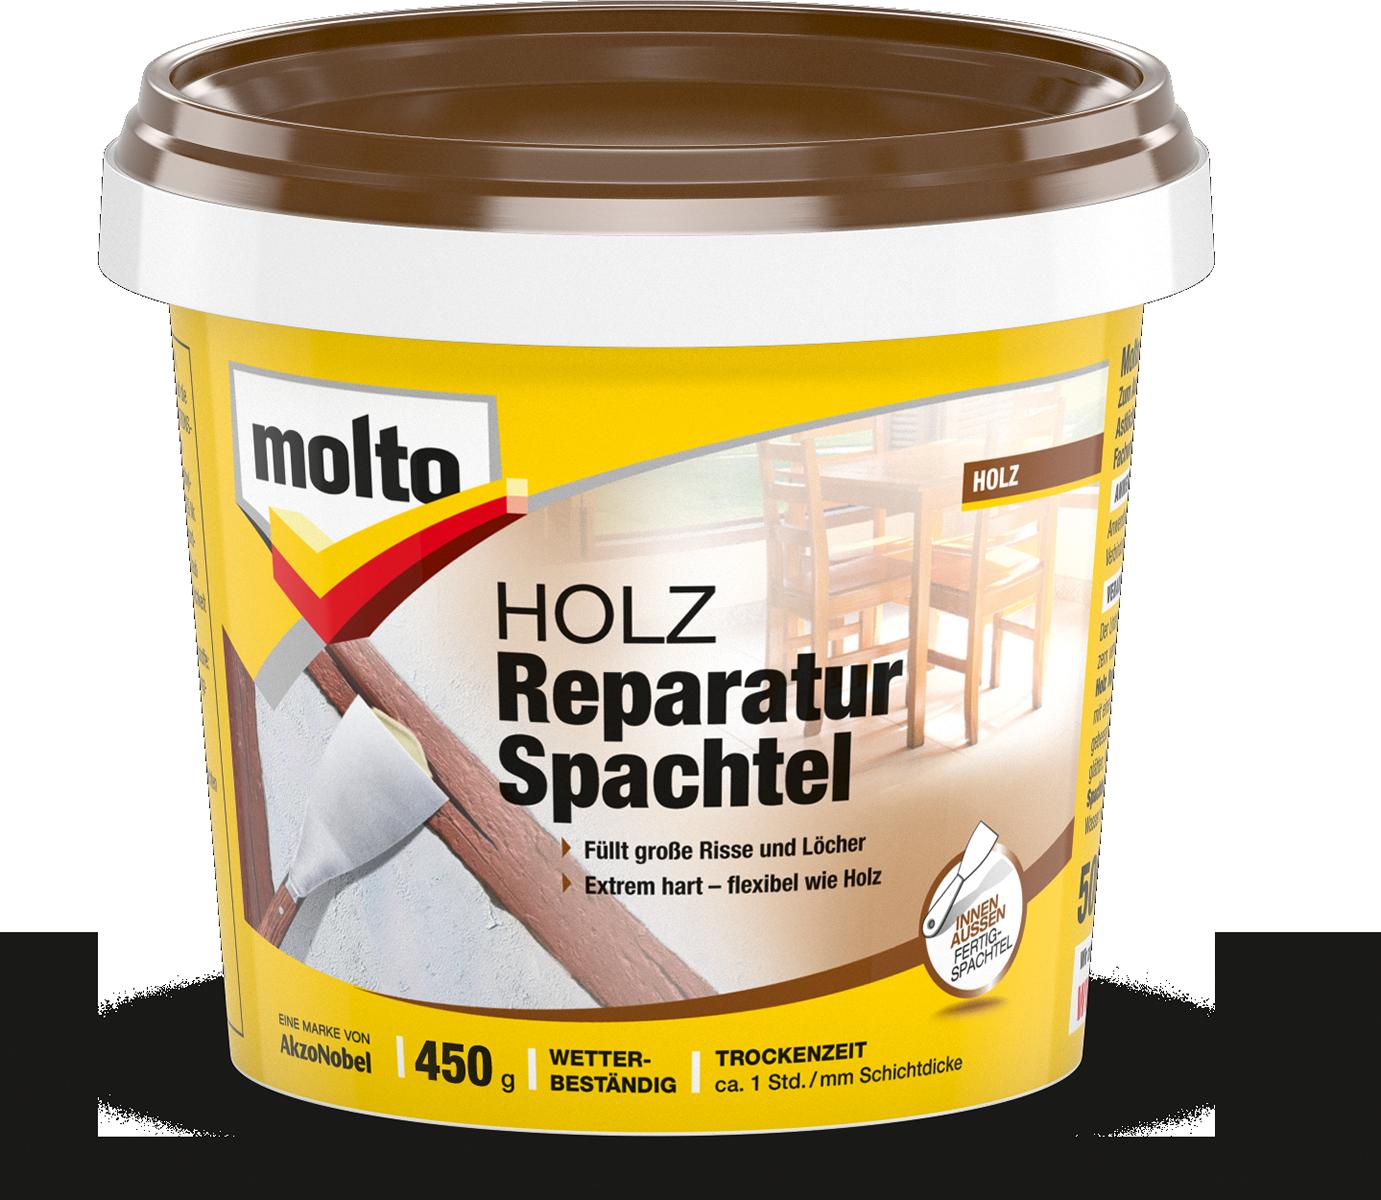 MOLTO HOLZ REPERATUR SPACHTEL 450G